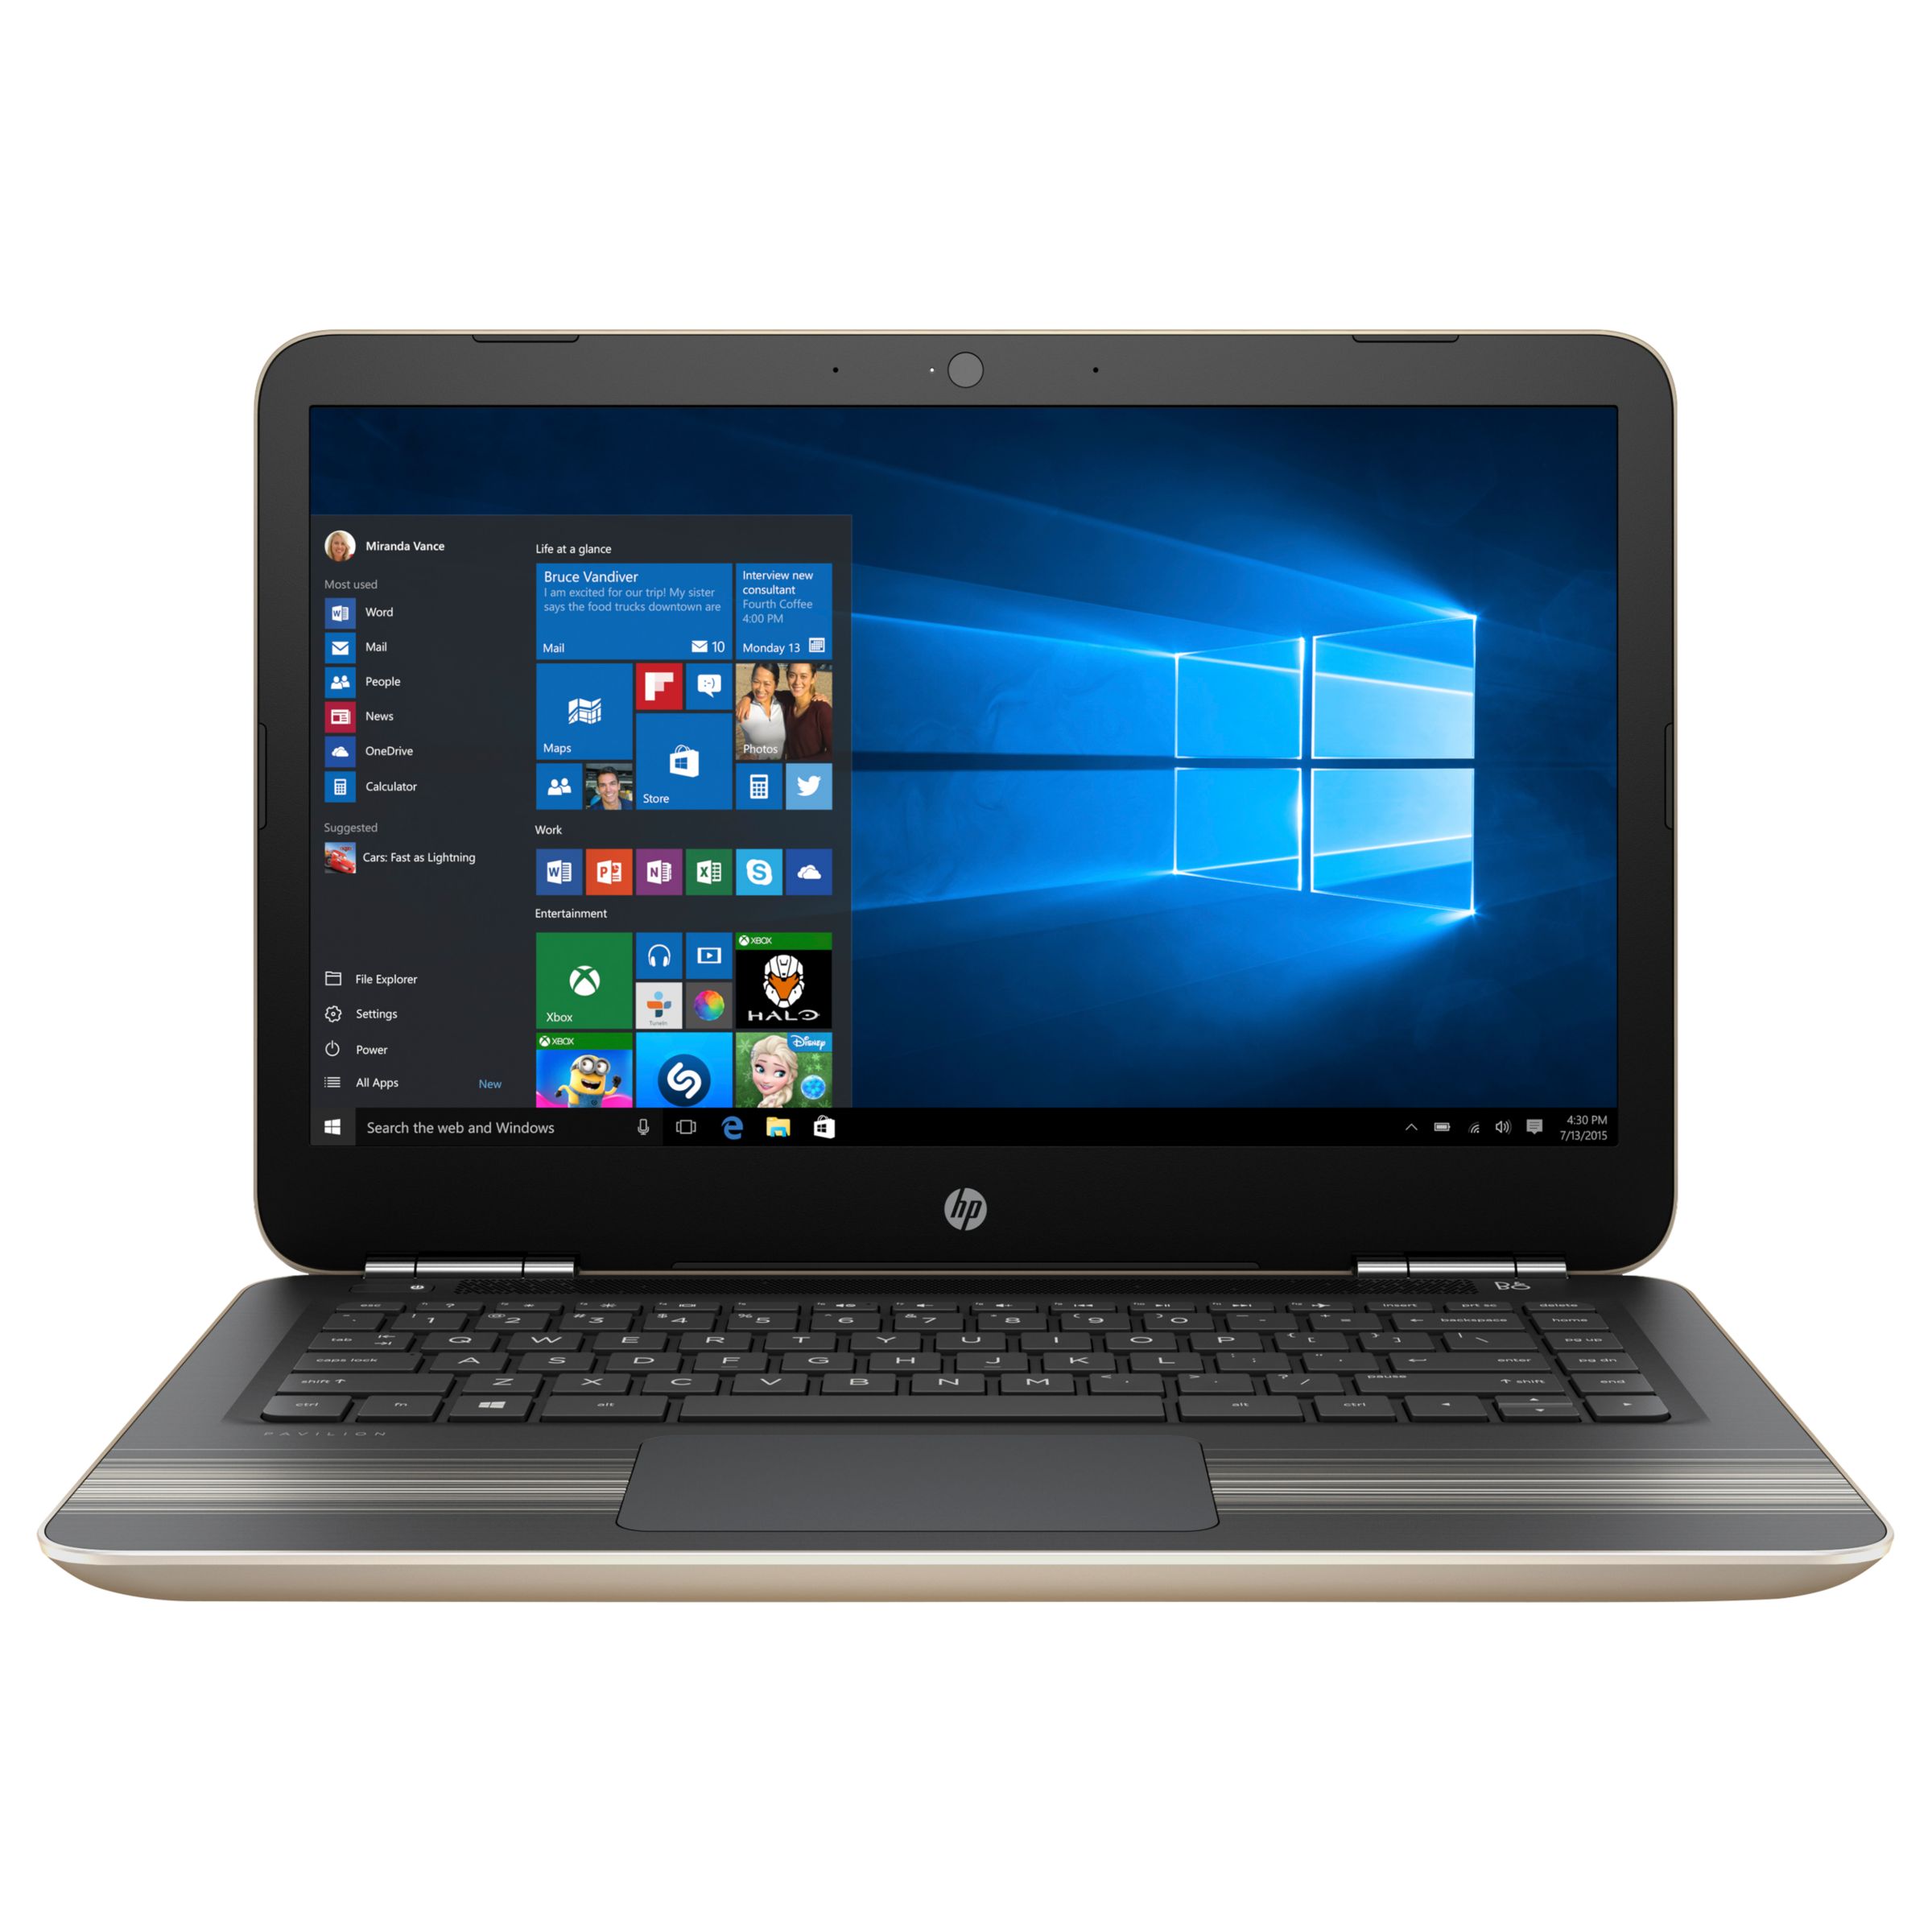 HP Pavilion 14-al118na Laptop, Intel Core i7, 8GB RAM, 256GB SSD, NVIDIA 940MX, 14" Full HD, Gold